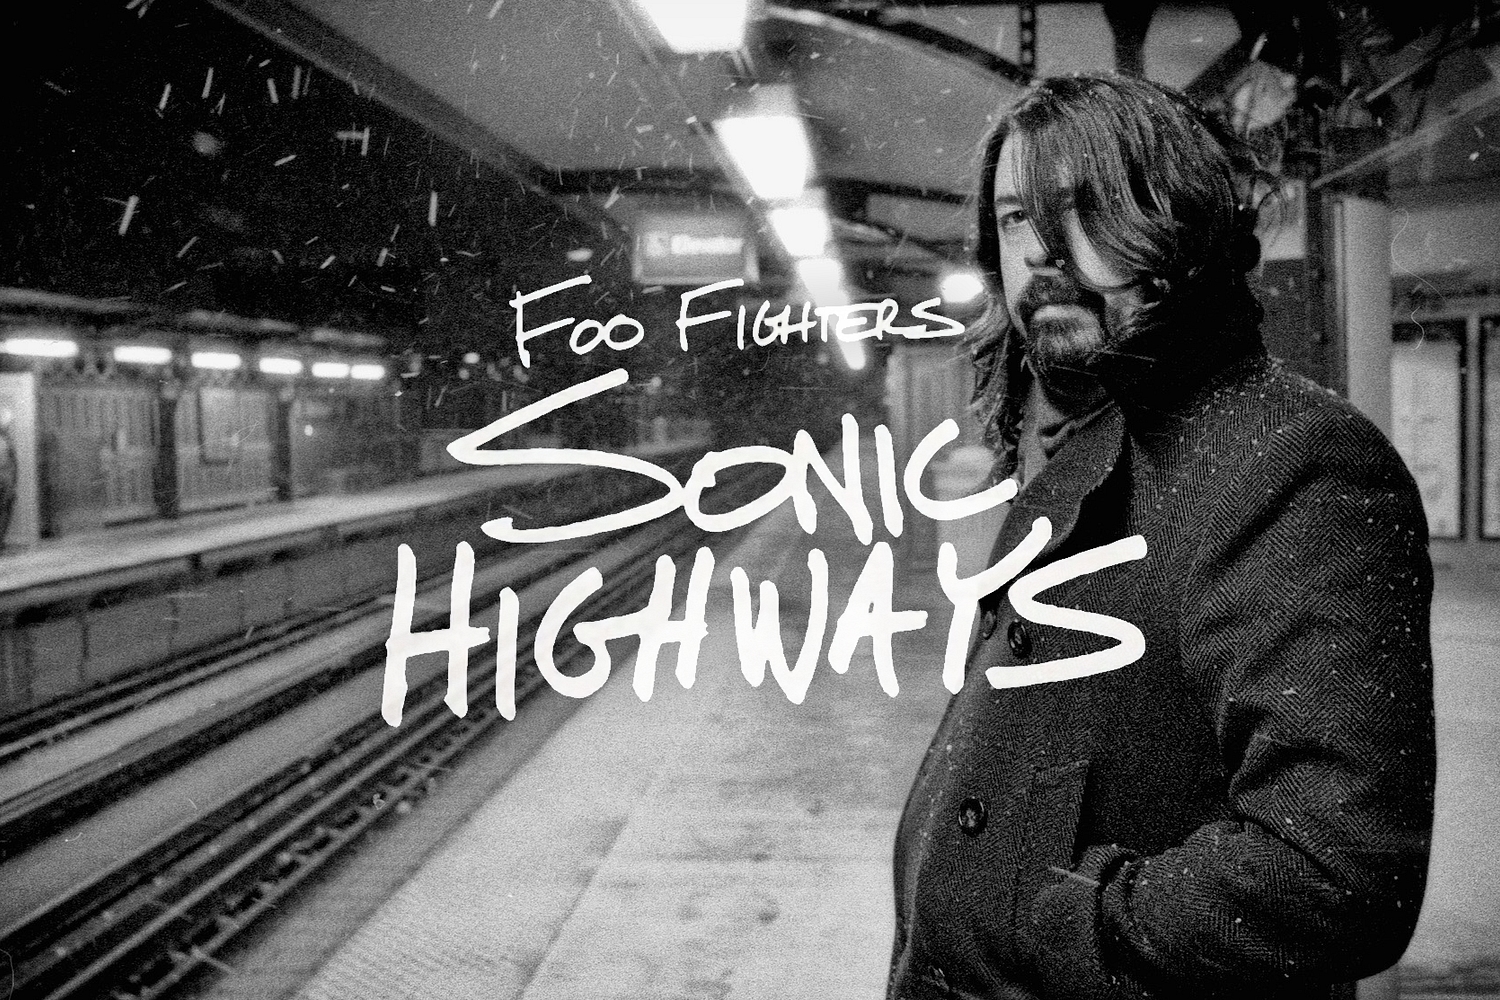 Watch Foo Fighters cover Black Sabbath’s ‘War Pigs’ on Letterman